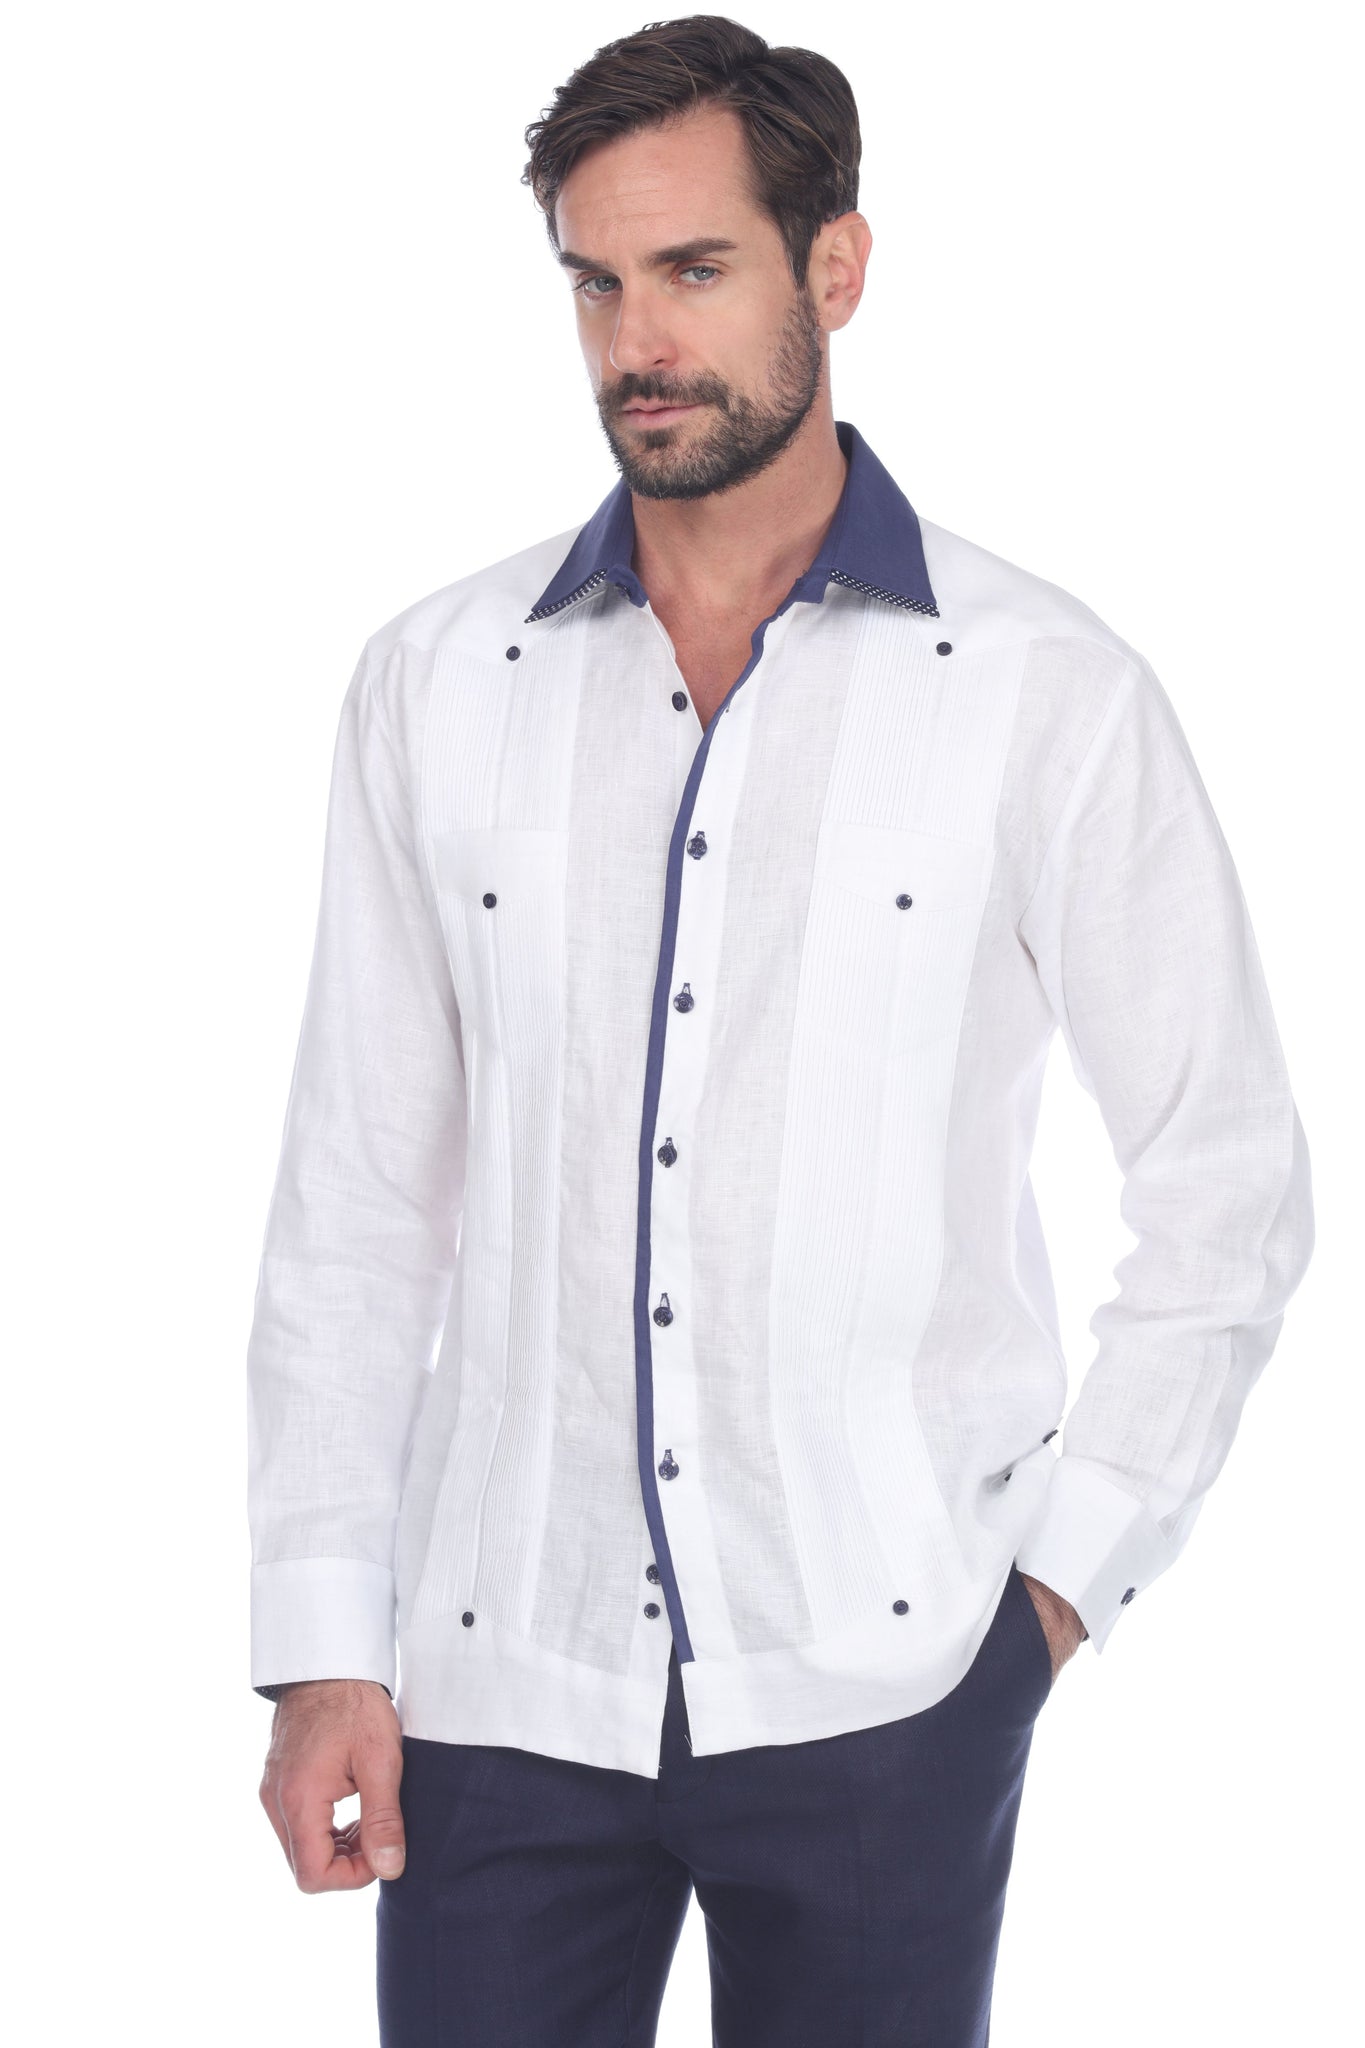 Mojito Men's Guayabera Shirt Long Sleeve 100% Linen with Stylish Print Trim Accent - Mojito Collection - Guayabera, Long Sleeve Shirt, Mens Shirt, Mojito Guayabera Shirt